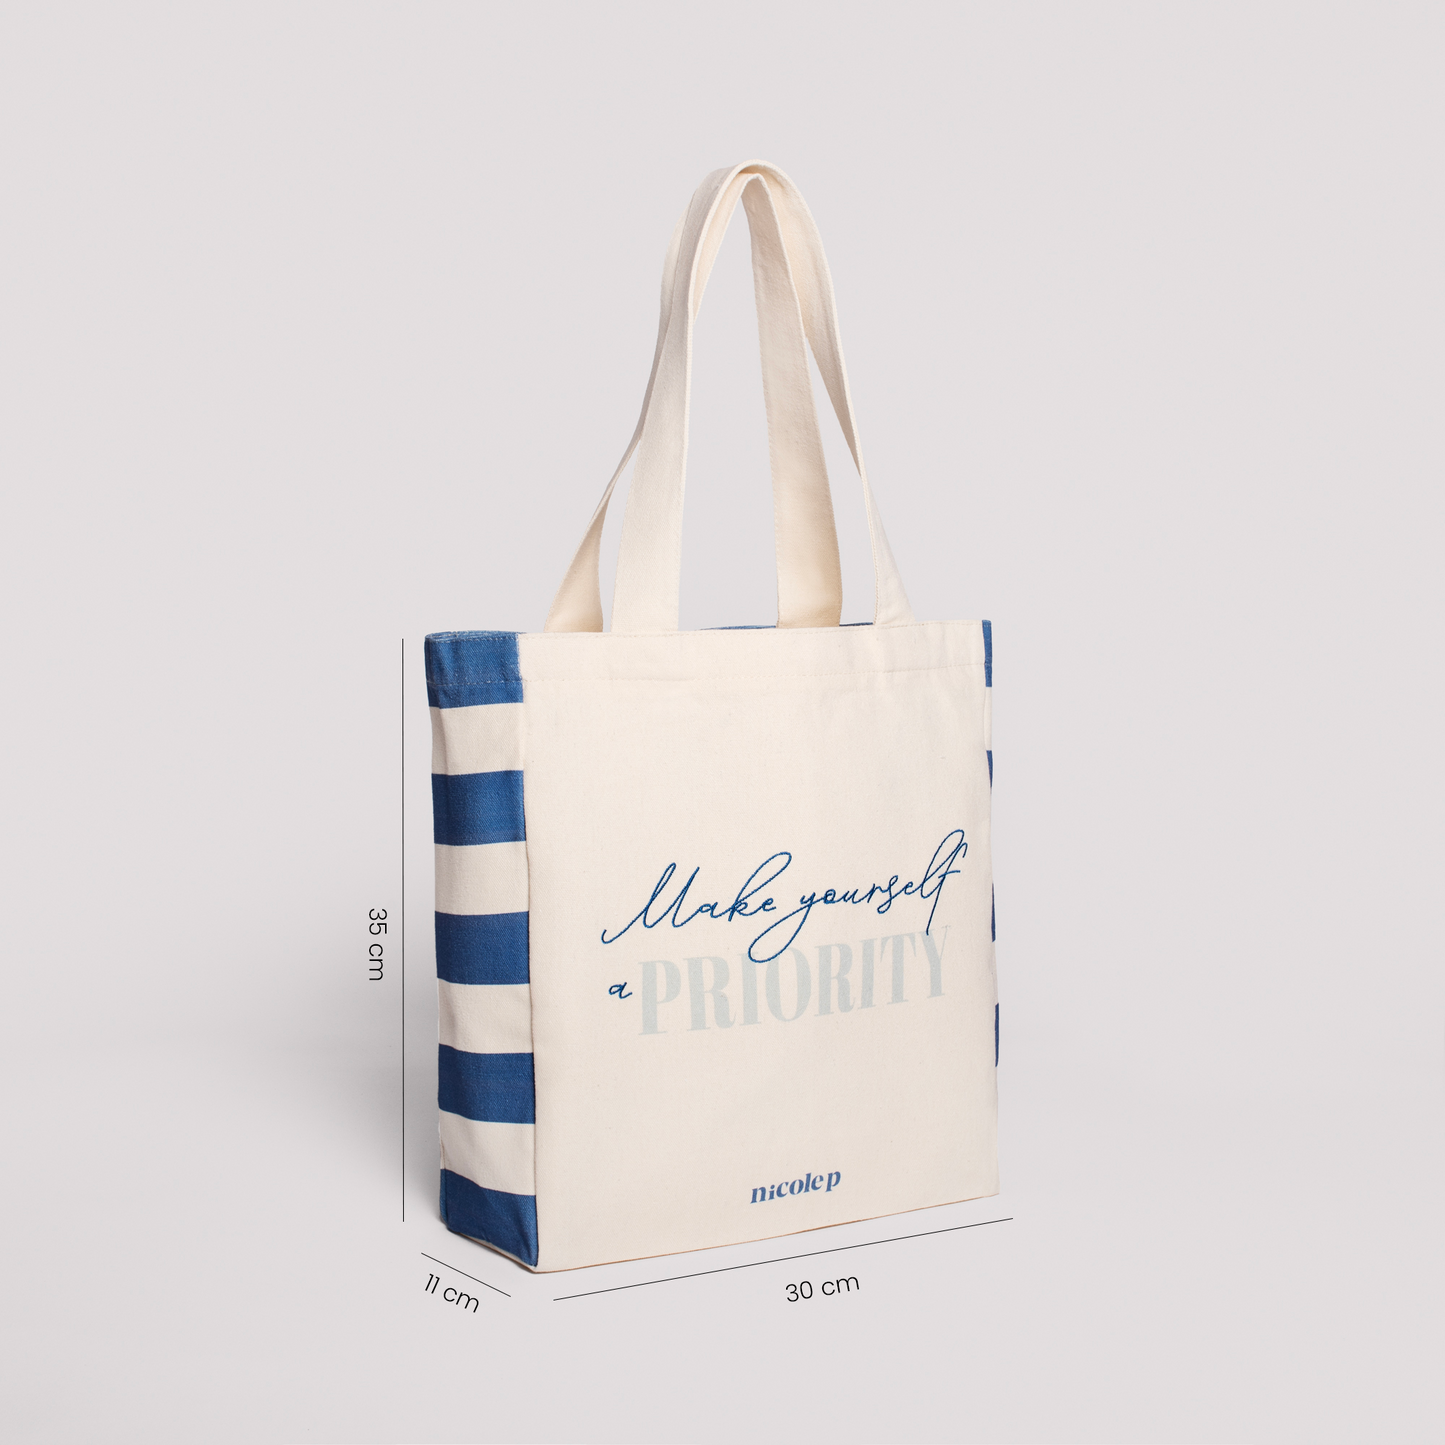 Santorini - small tote bag